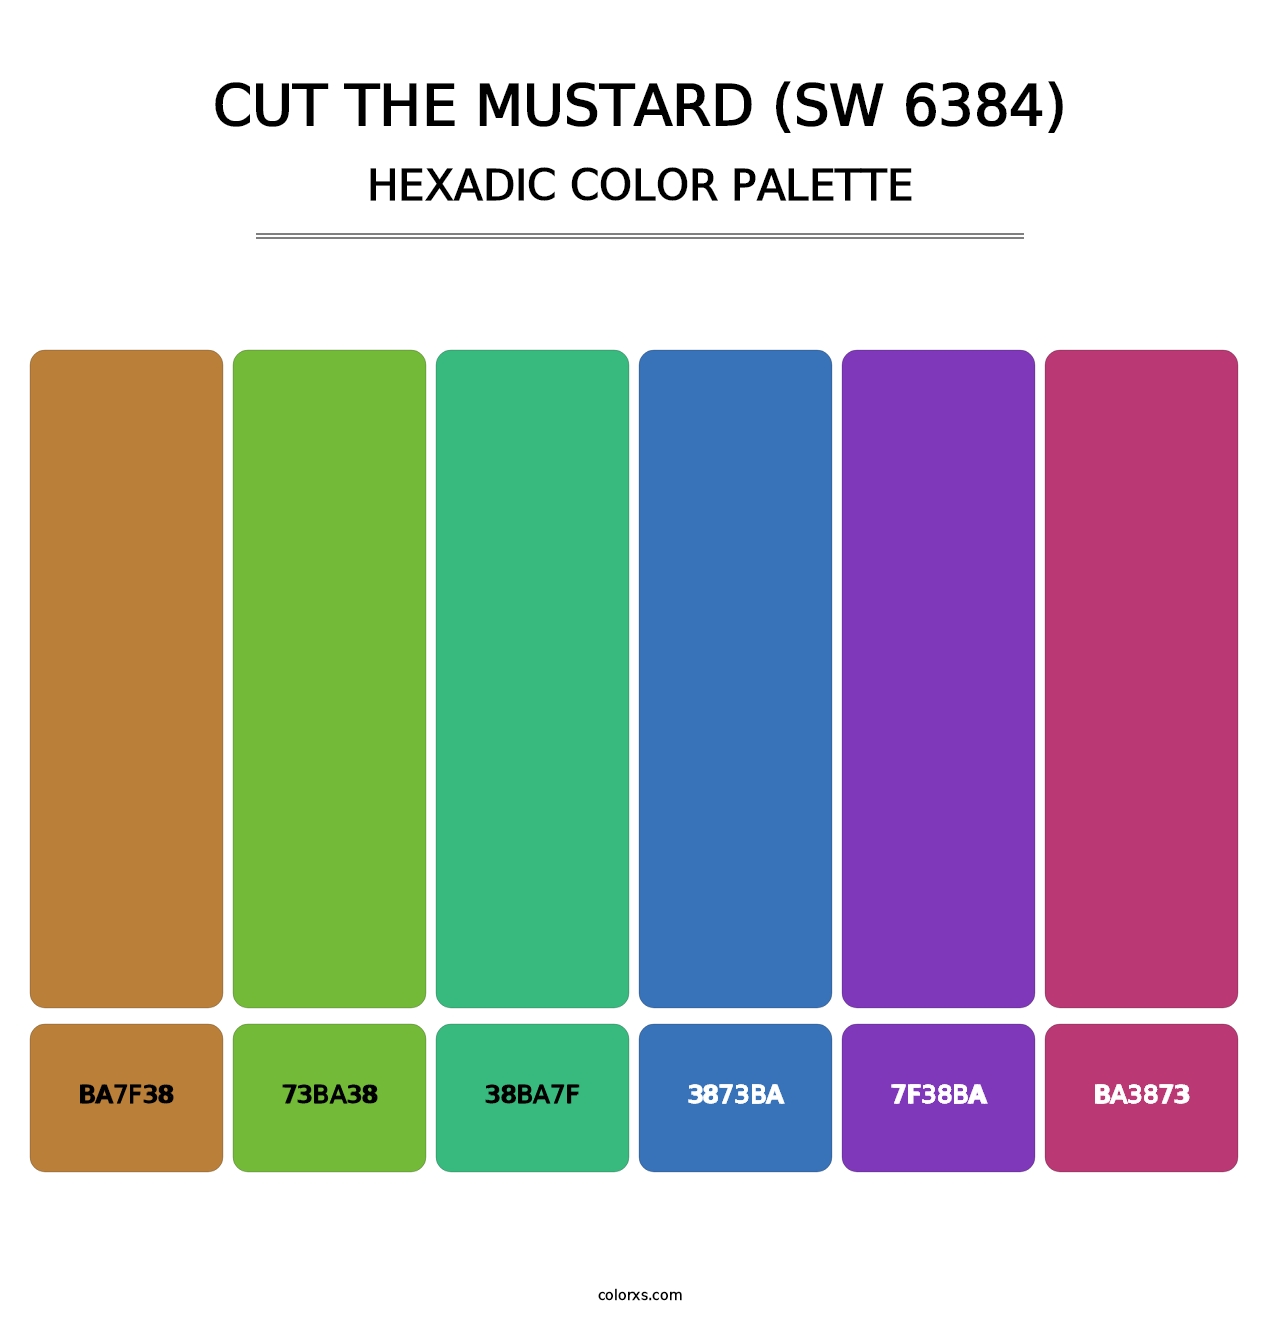 Cut the Mustard (SW 6384) - Hexadic Color Palette